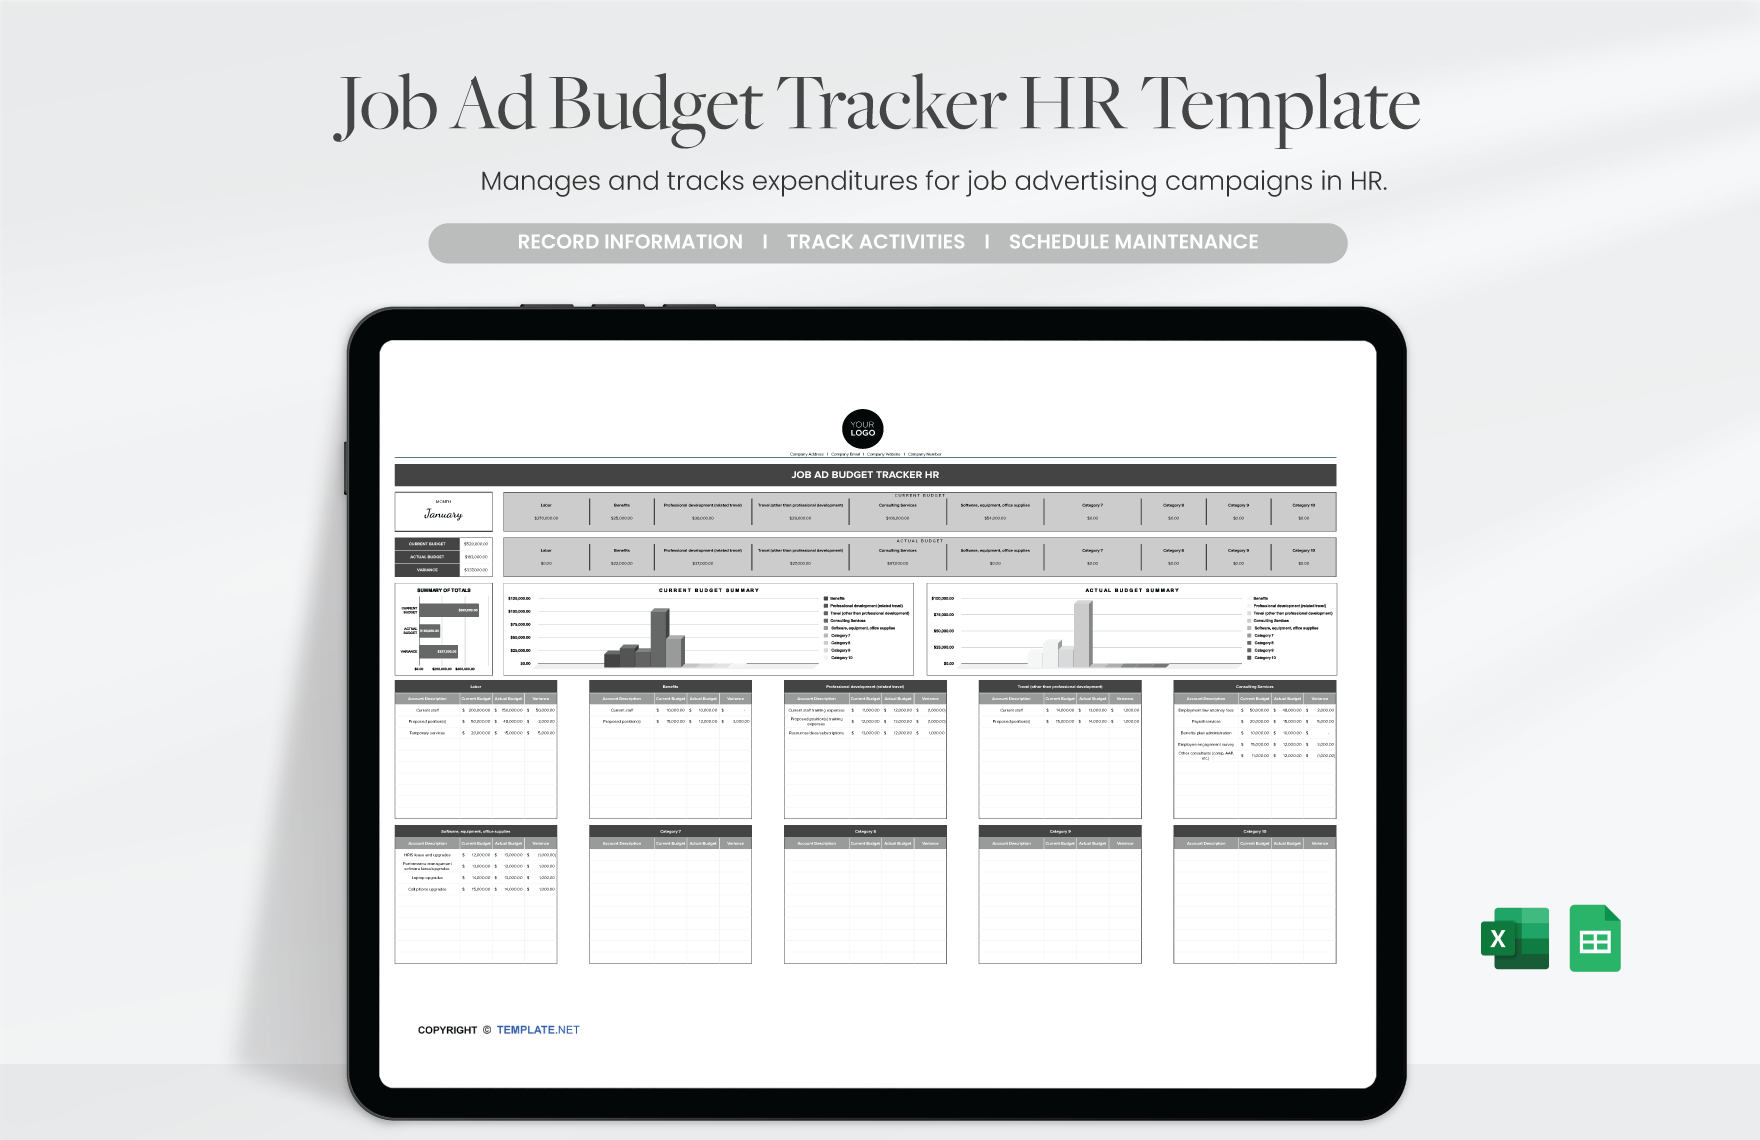 Job Ad Budget Tracker HR Template